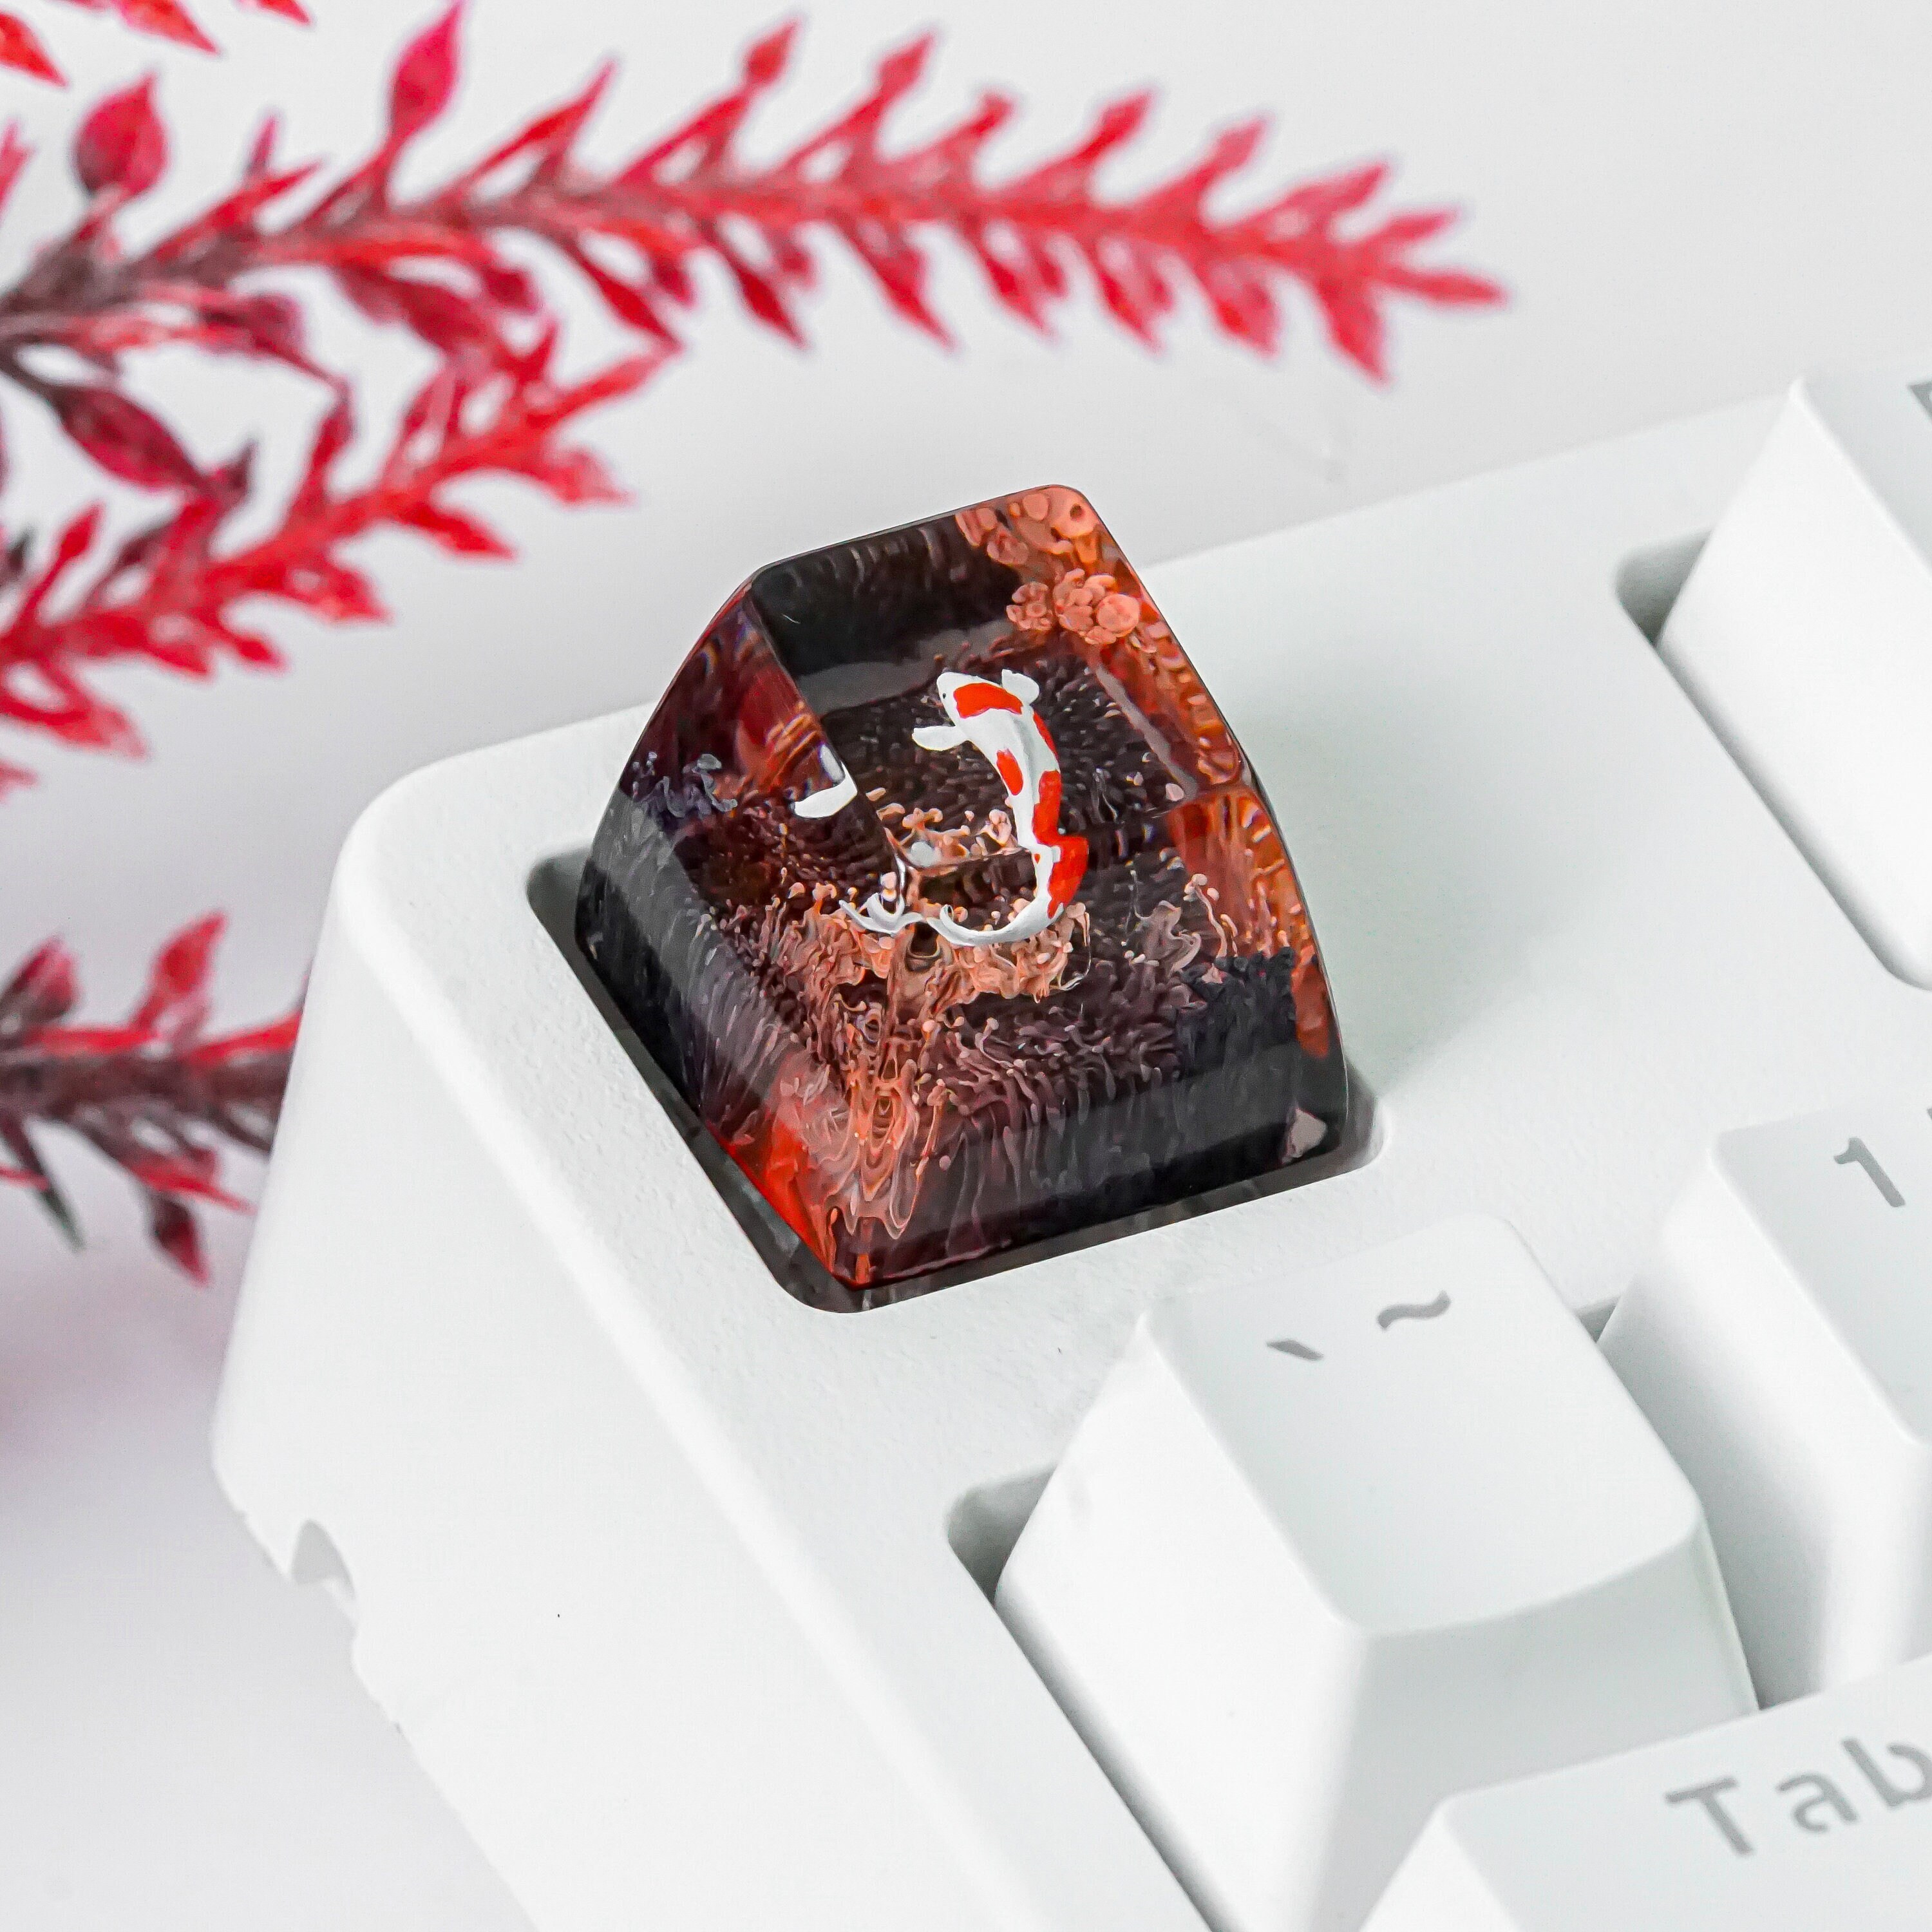 Koi Fish Keycap, Red & Black Coral, Artisan Keycap, Japanese Koi, Keycap for MX Cherry Switches Mechanical Keyboard, Handmade Gift